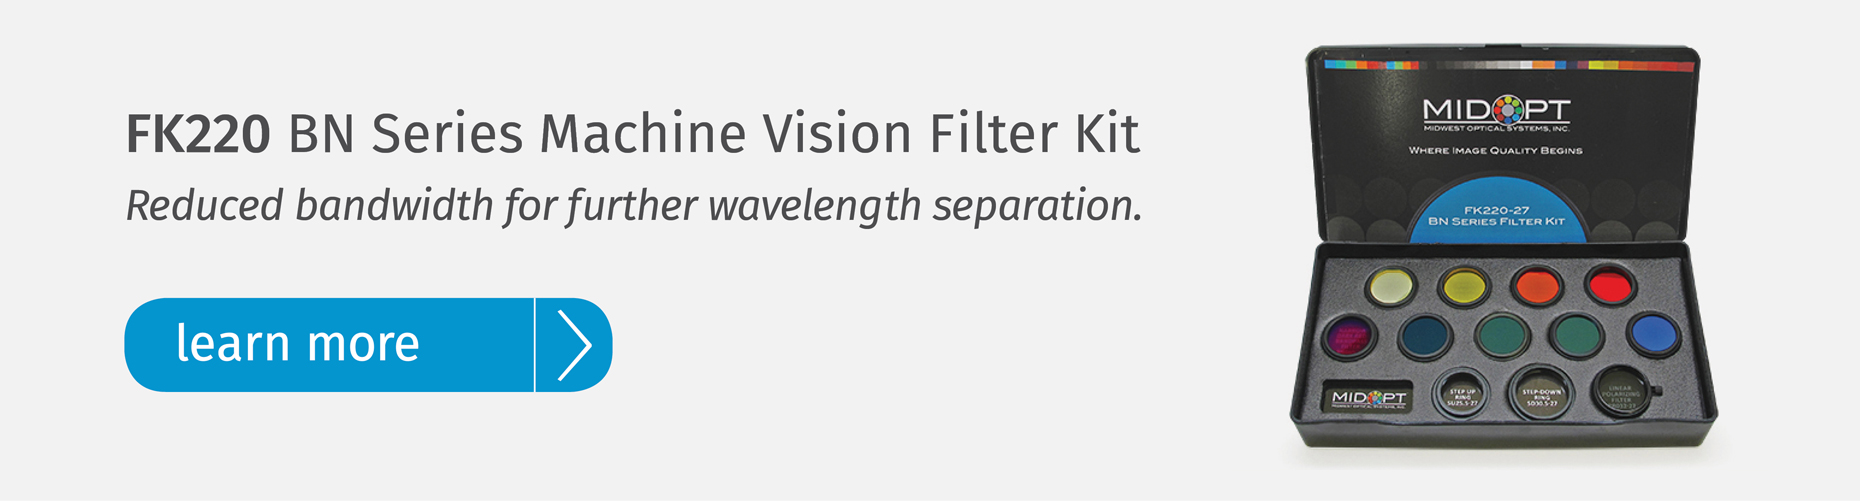 MidOpt FK220 BN Series Bandpass Filter Test Kit